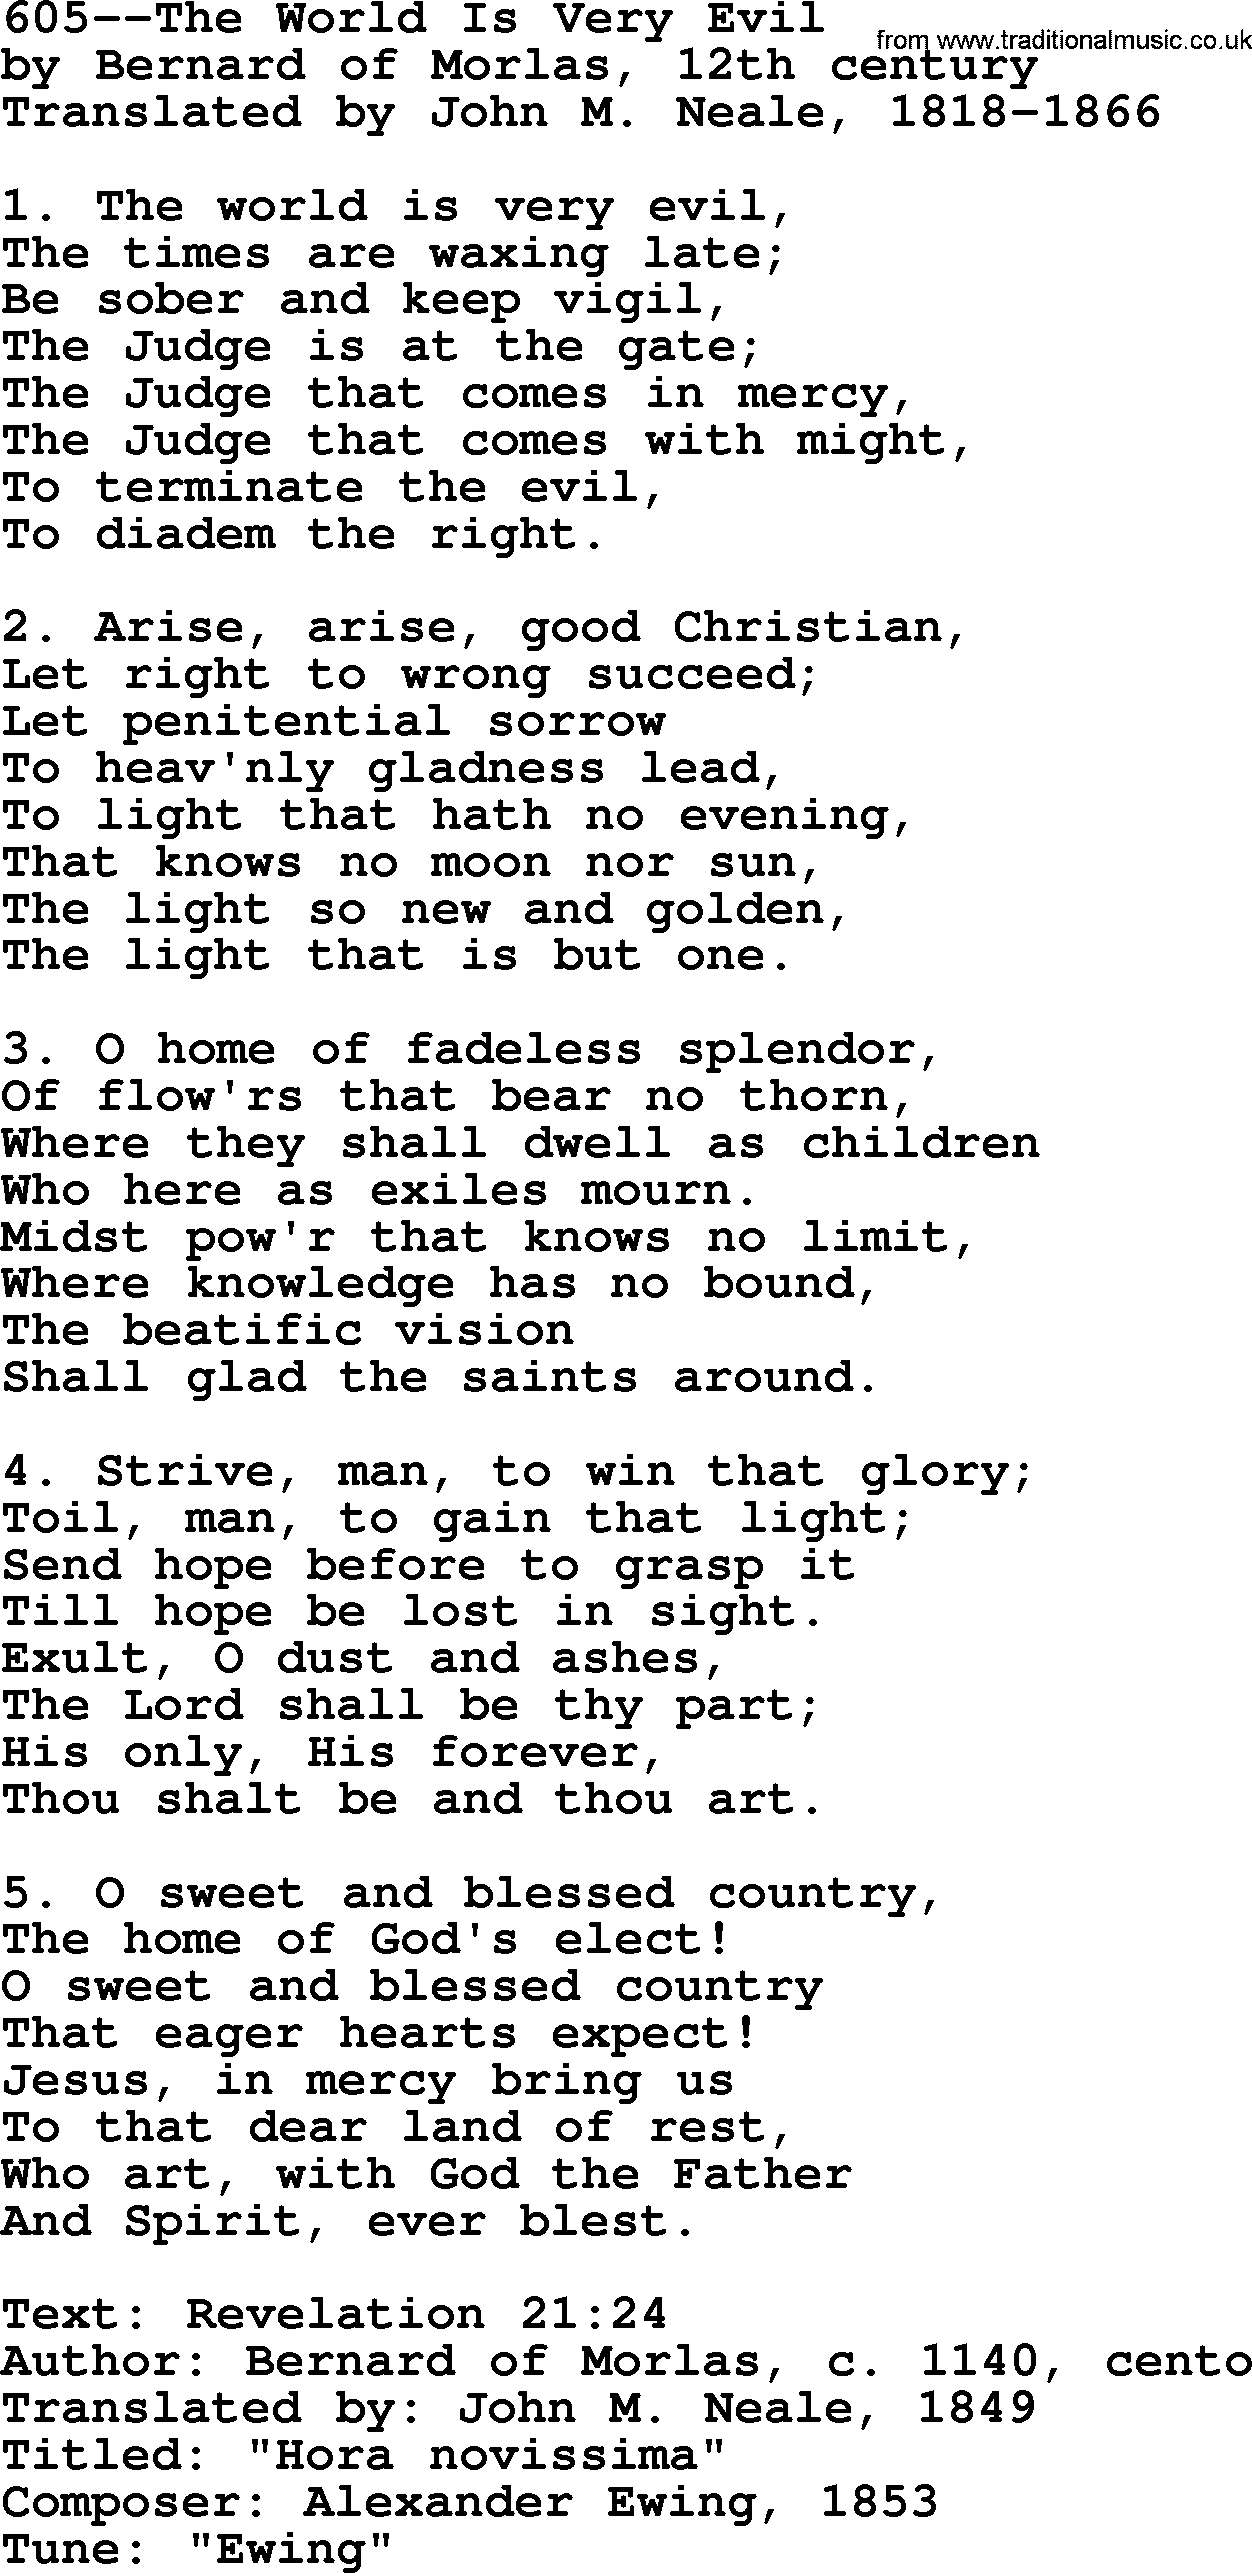 Lutheran Hymn: 605--The World Is Very Evil.txt lyrics with PDF